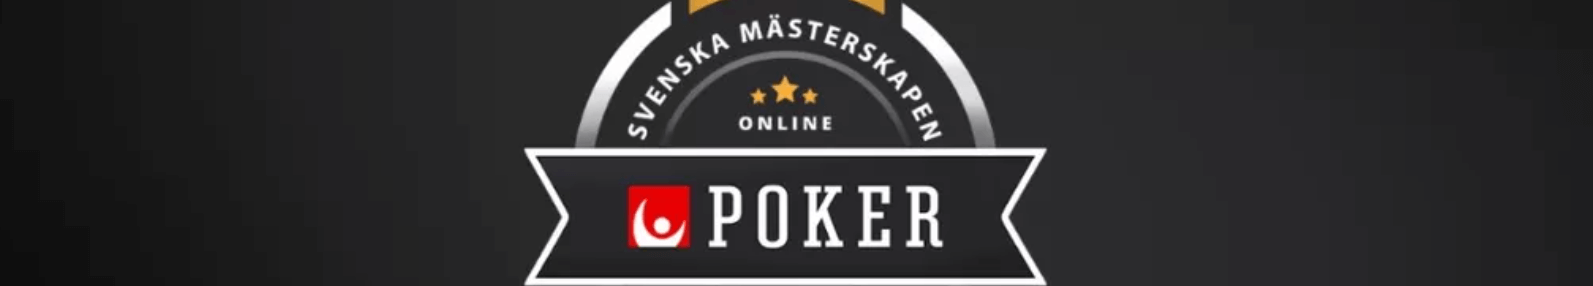 Poker-SM 2021 